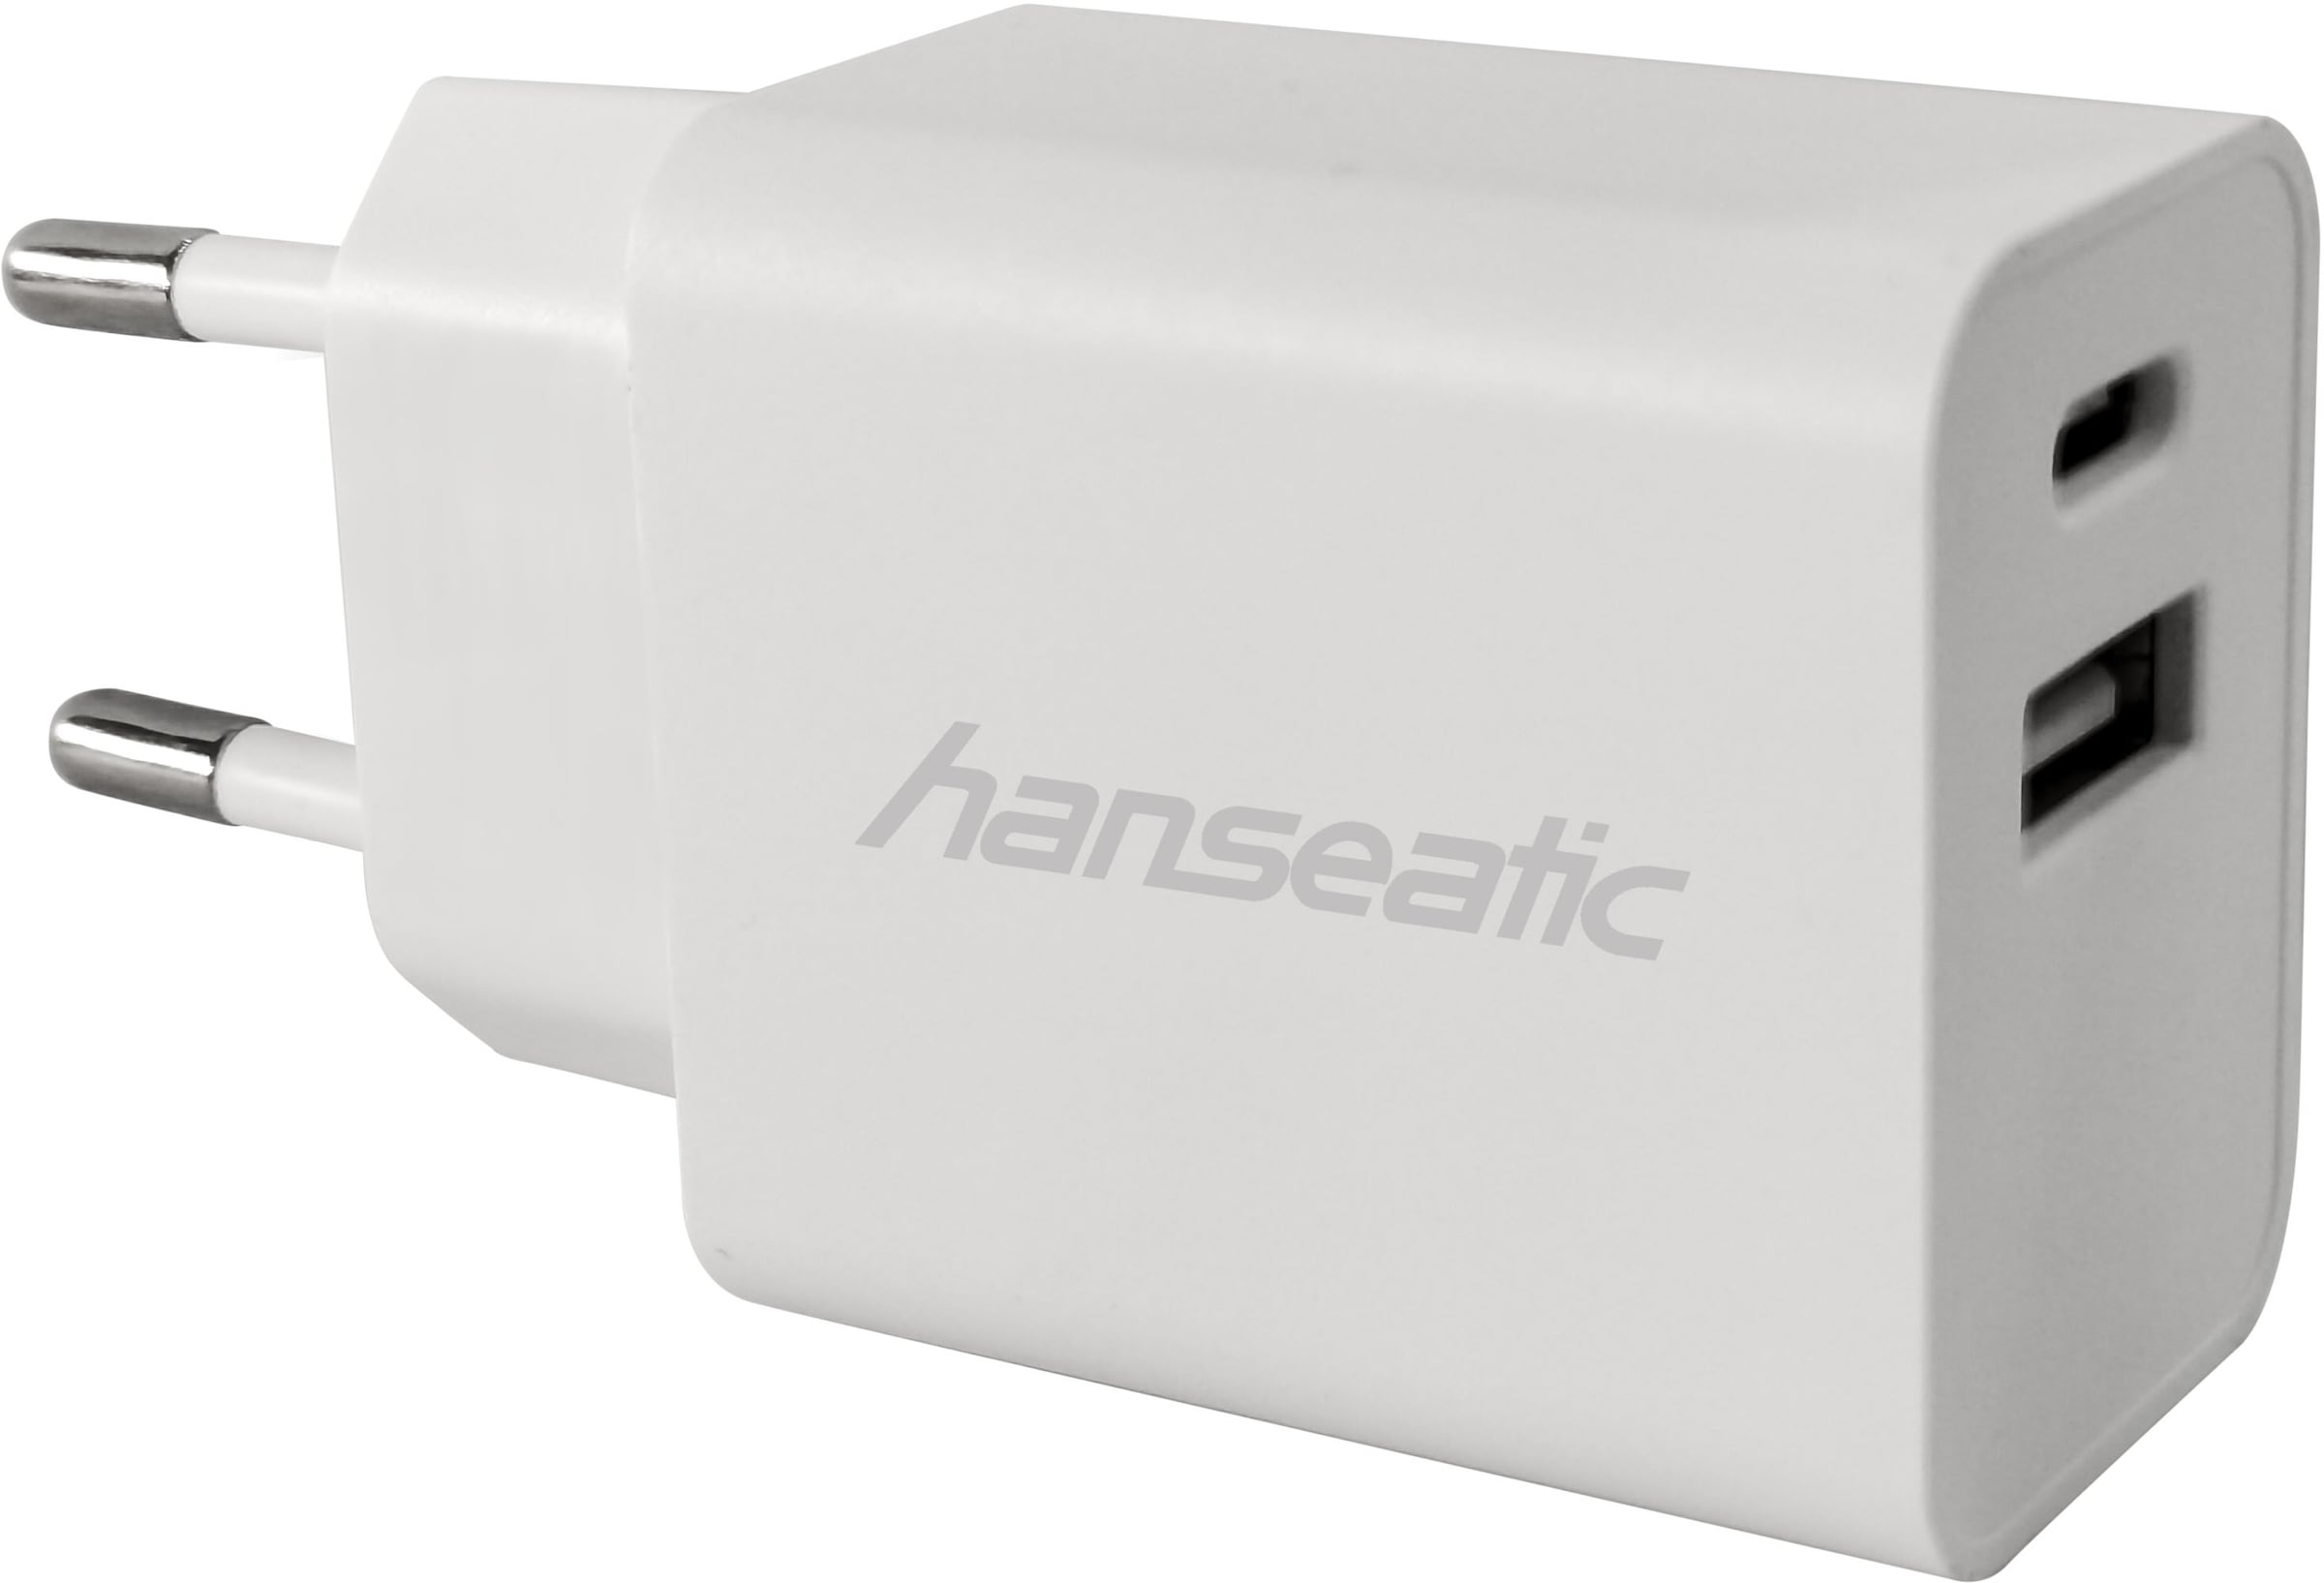 Hanseatic Smartphone-Ladegerät, USB Ladegerät und QI-Ladeadapter, 1,5m Kabellänge